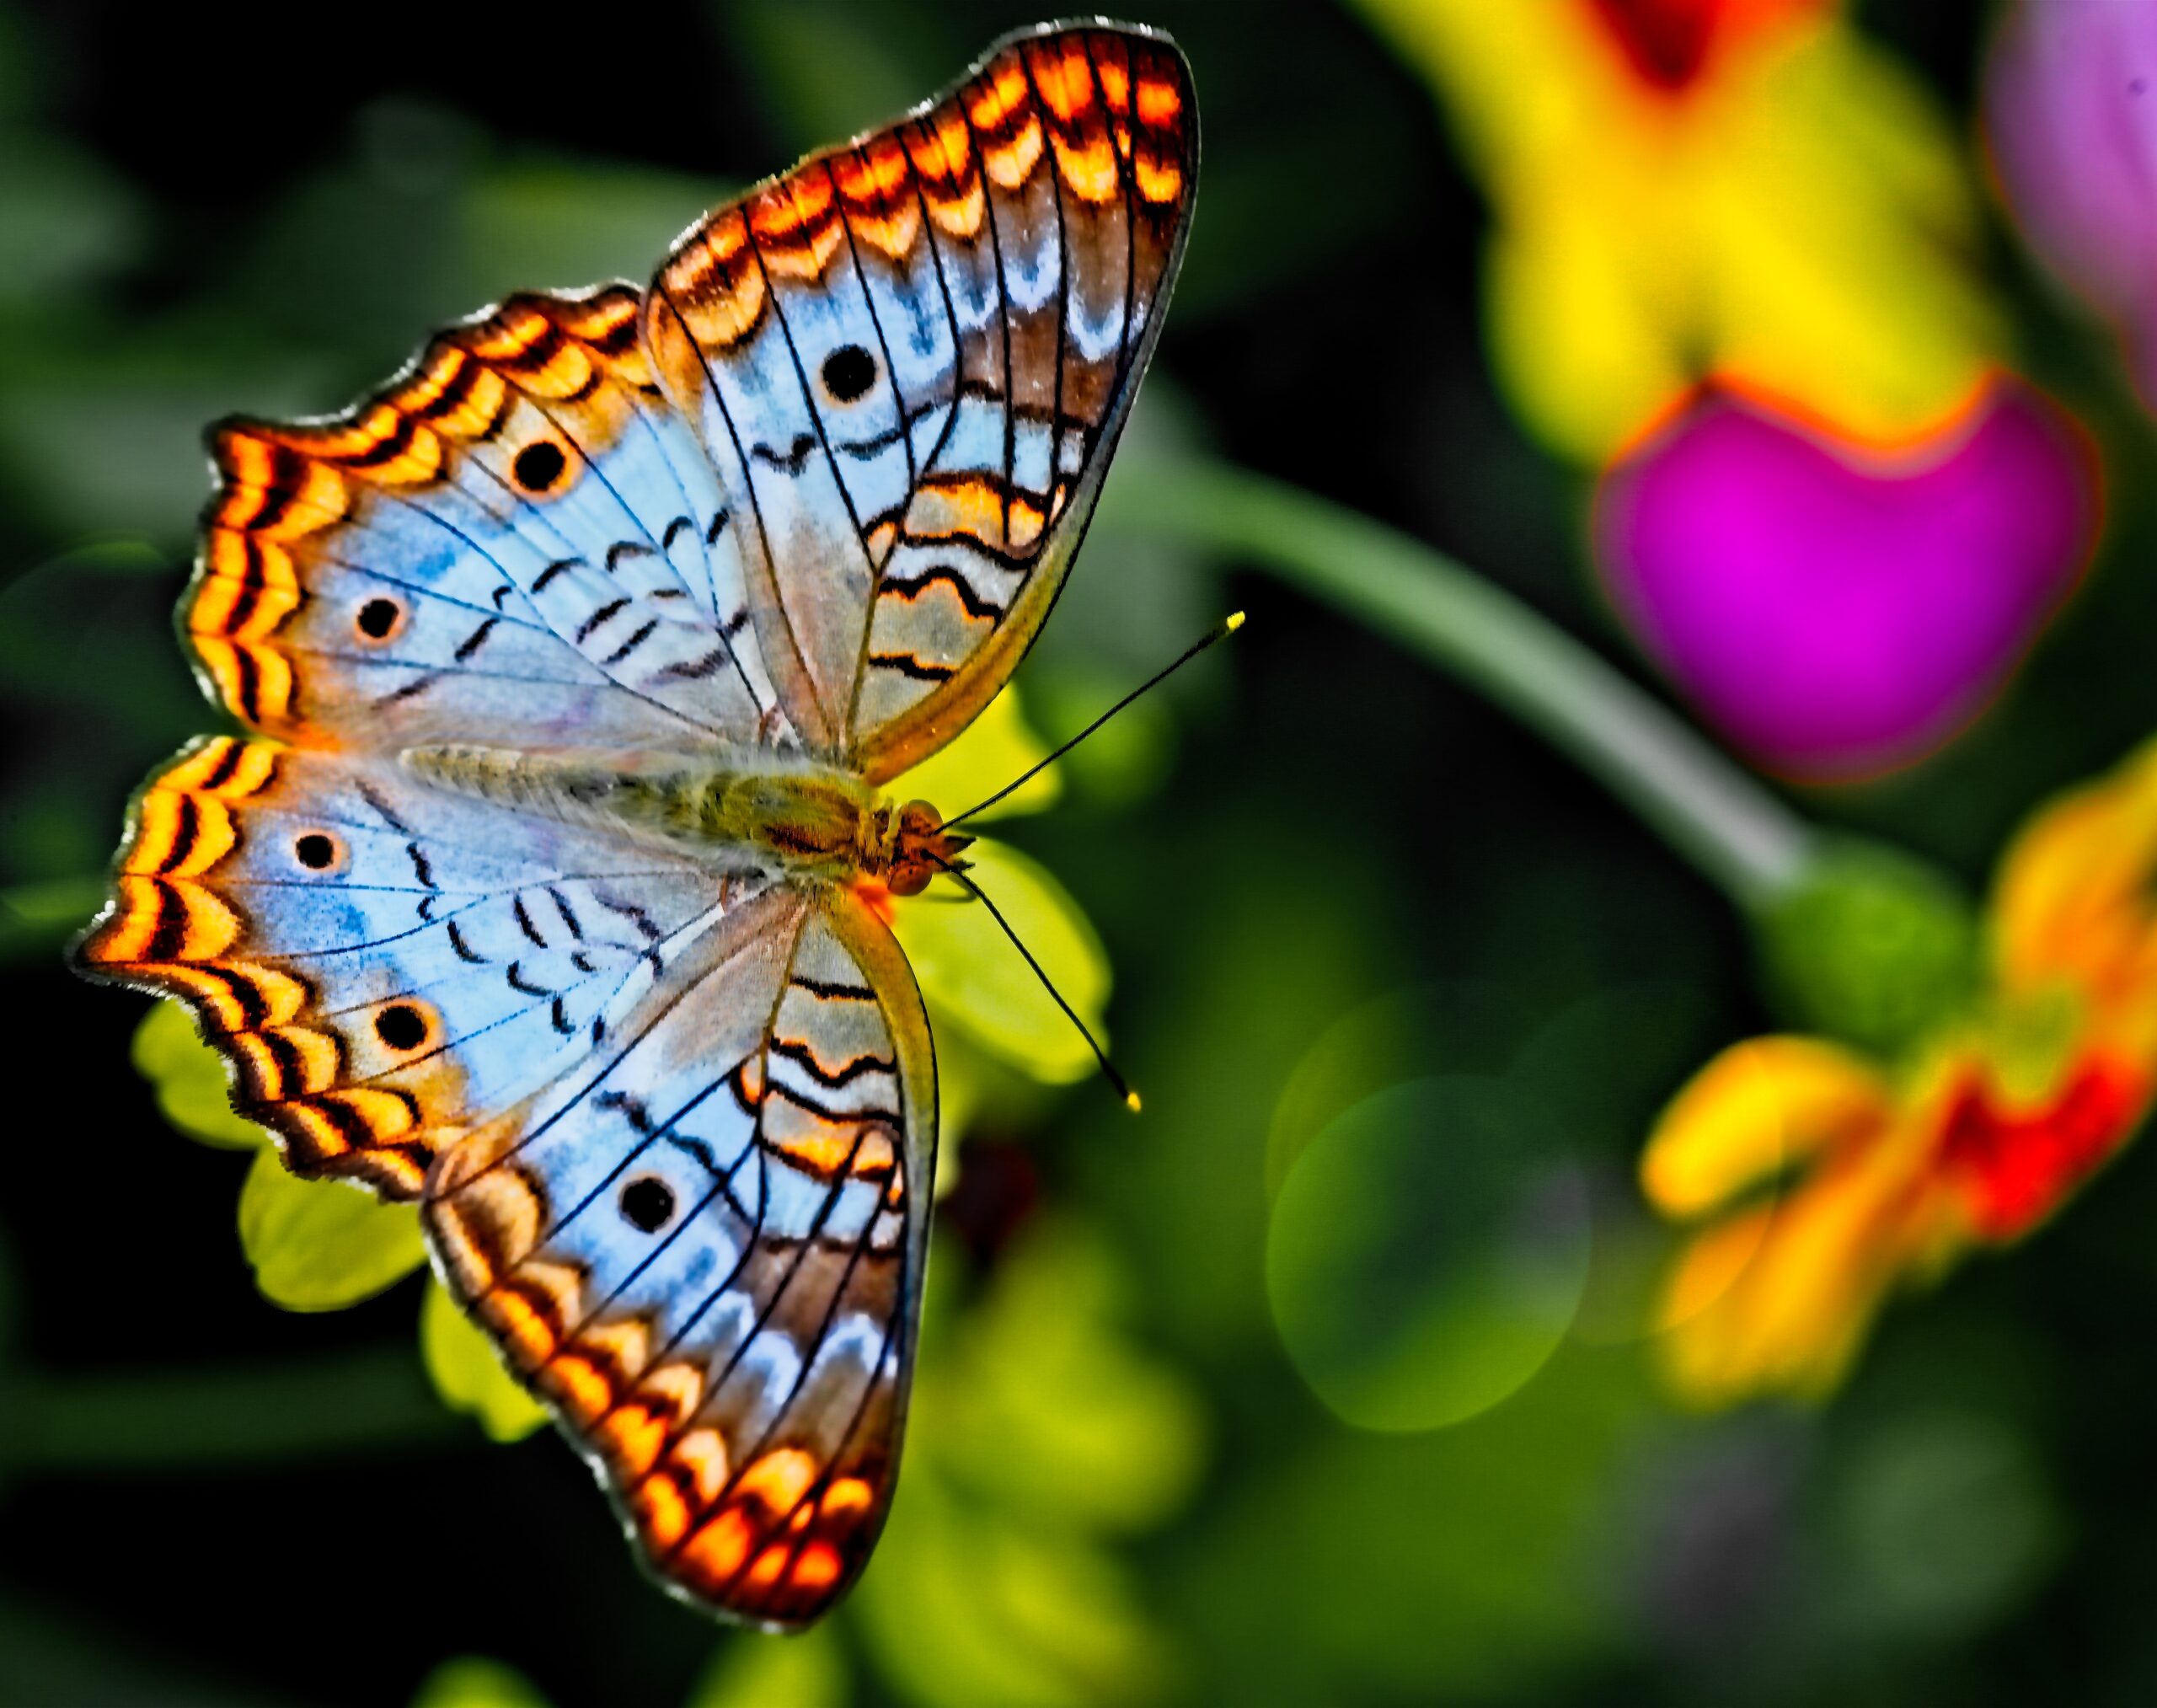 Butterfly, symbol of dormant dreams reawakened